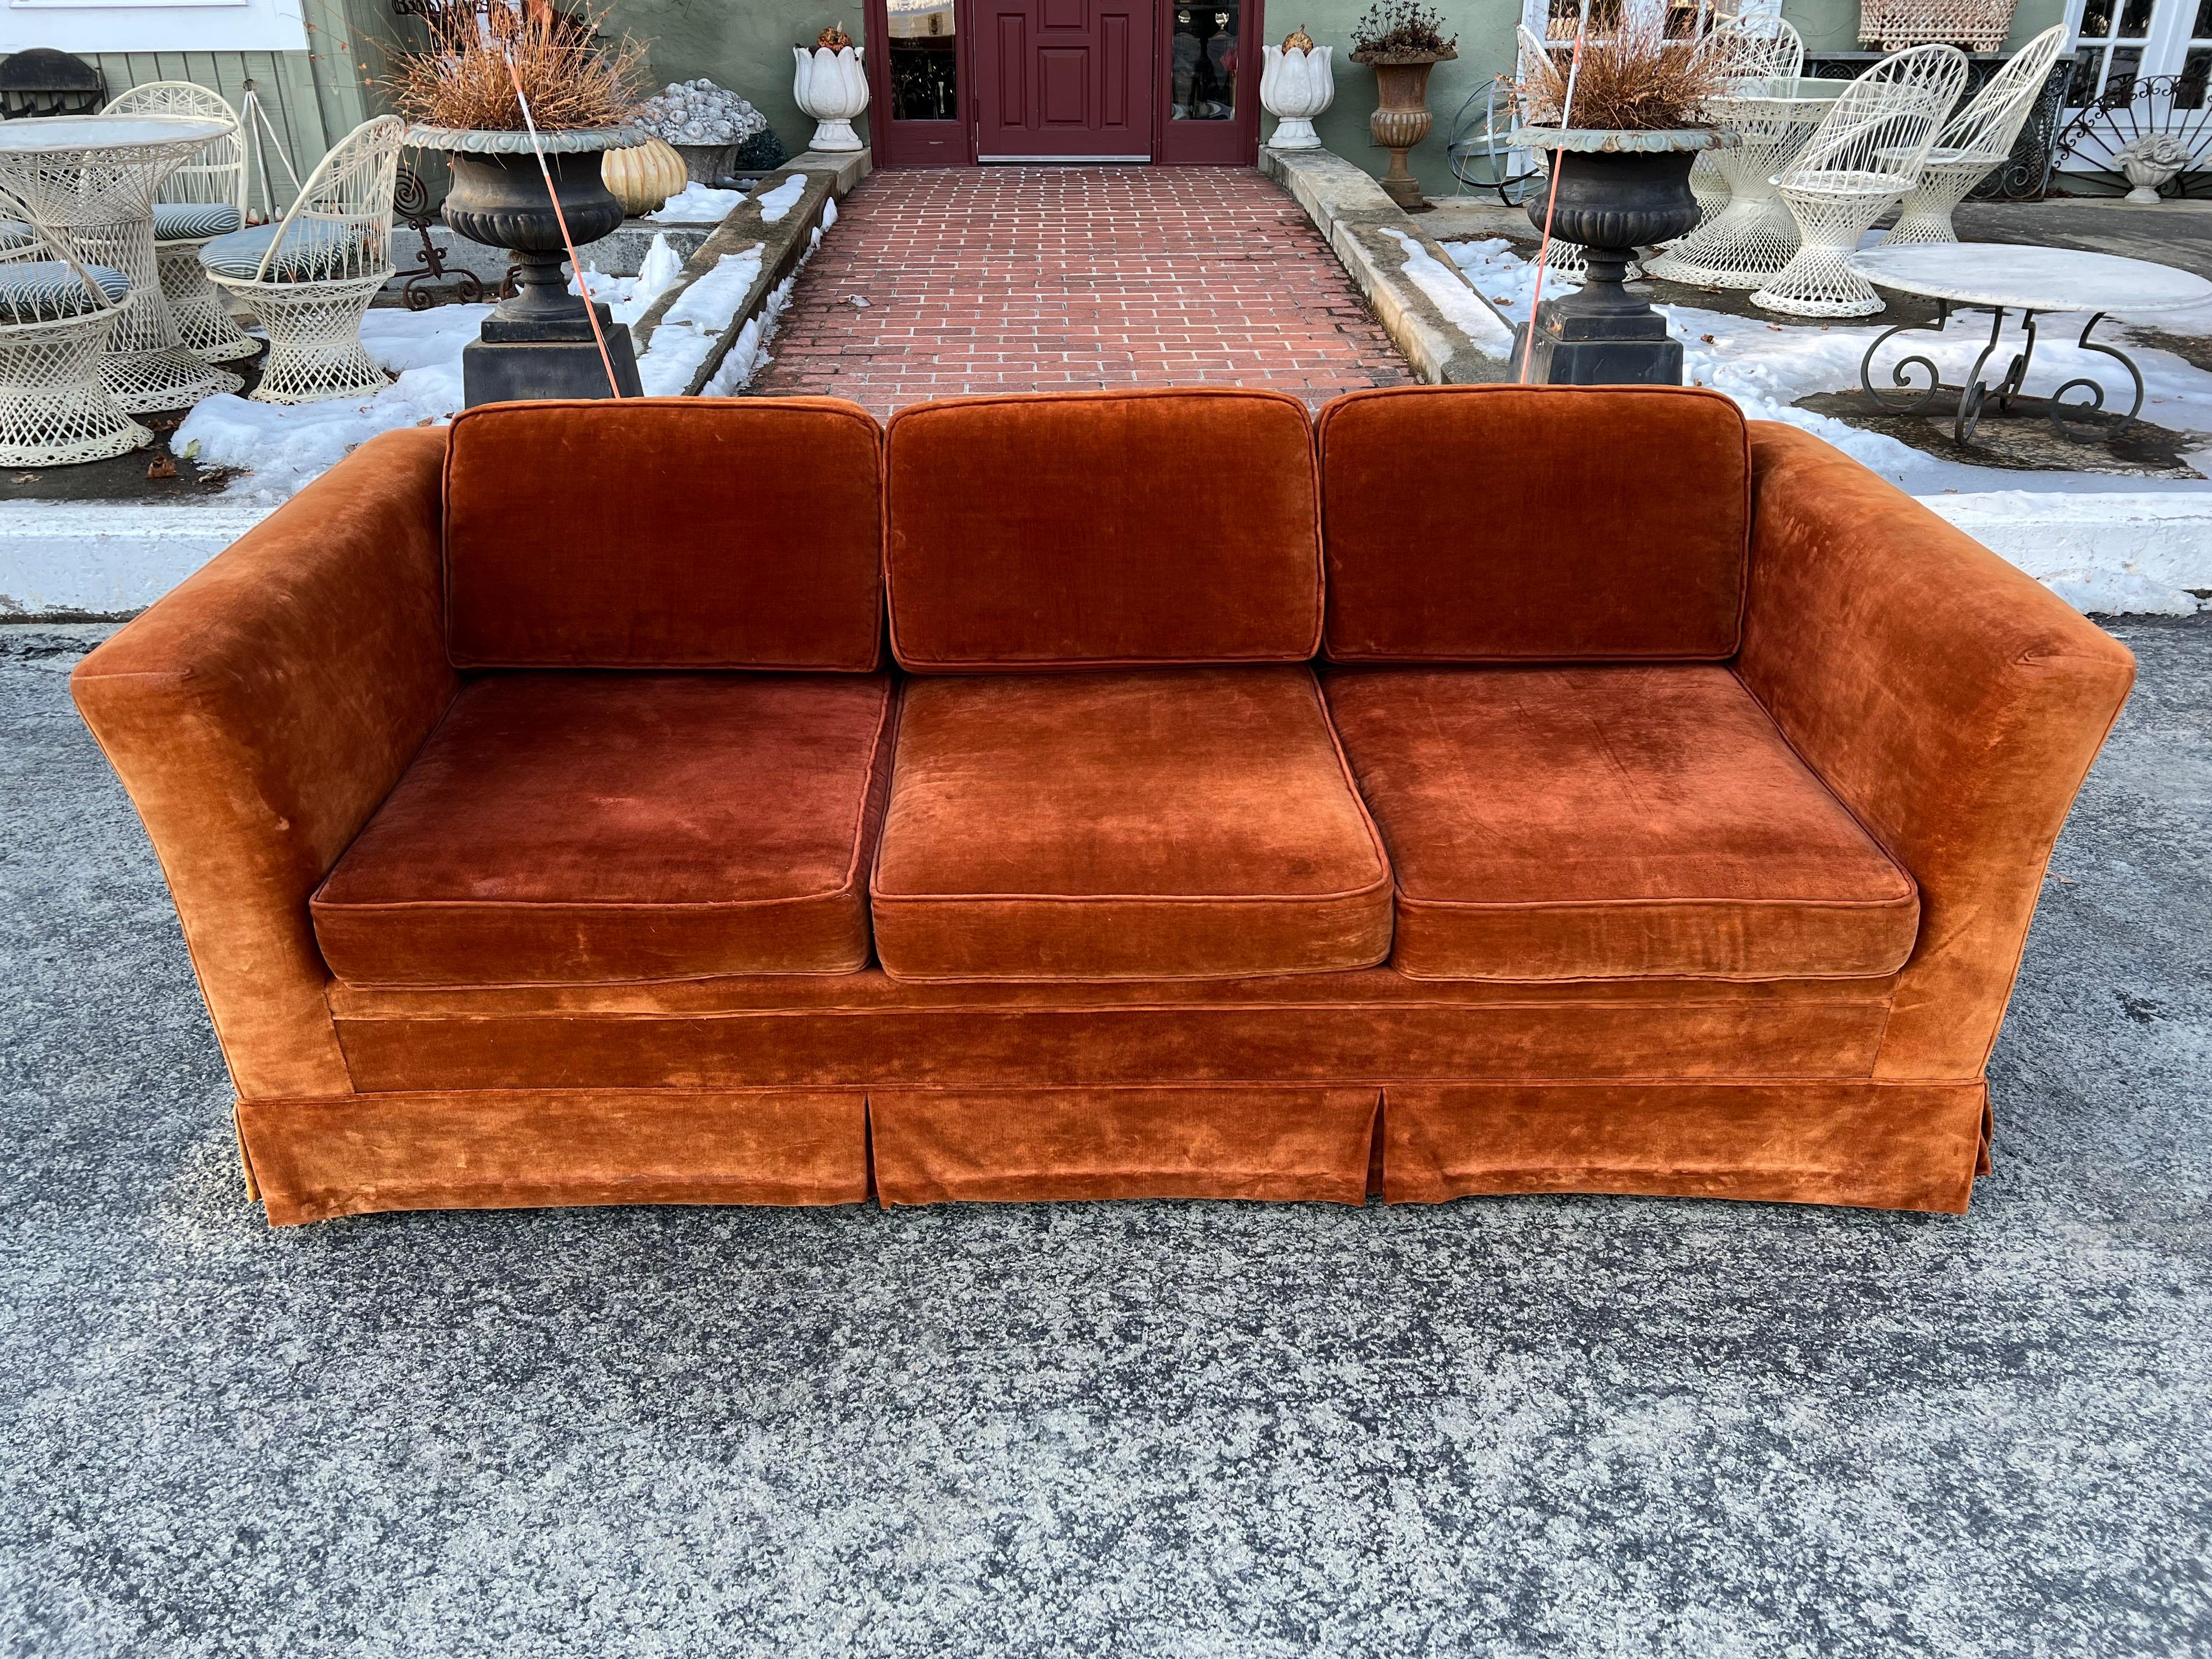 Vintage Orange Sofa - 10 For Sale on 1stDibs | vintage orange couch, retro  orange couch, orange vintage couch